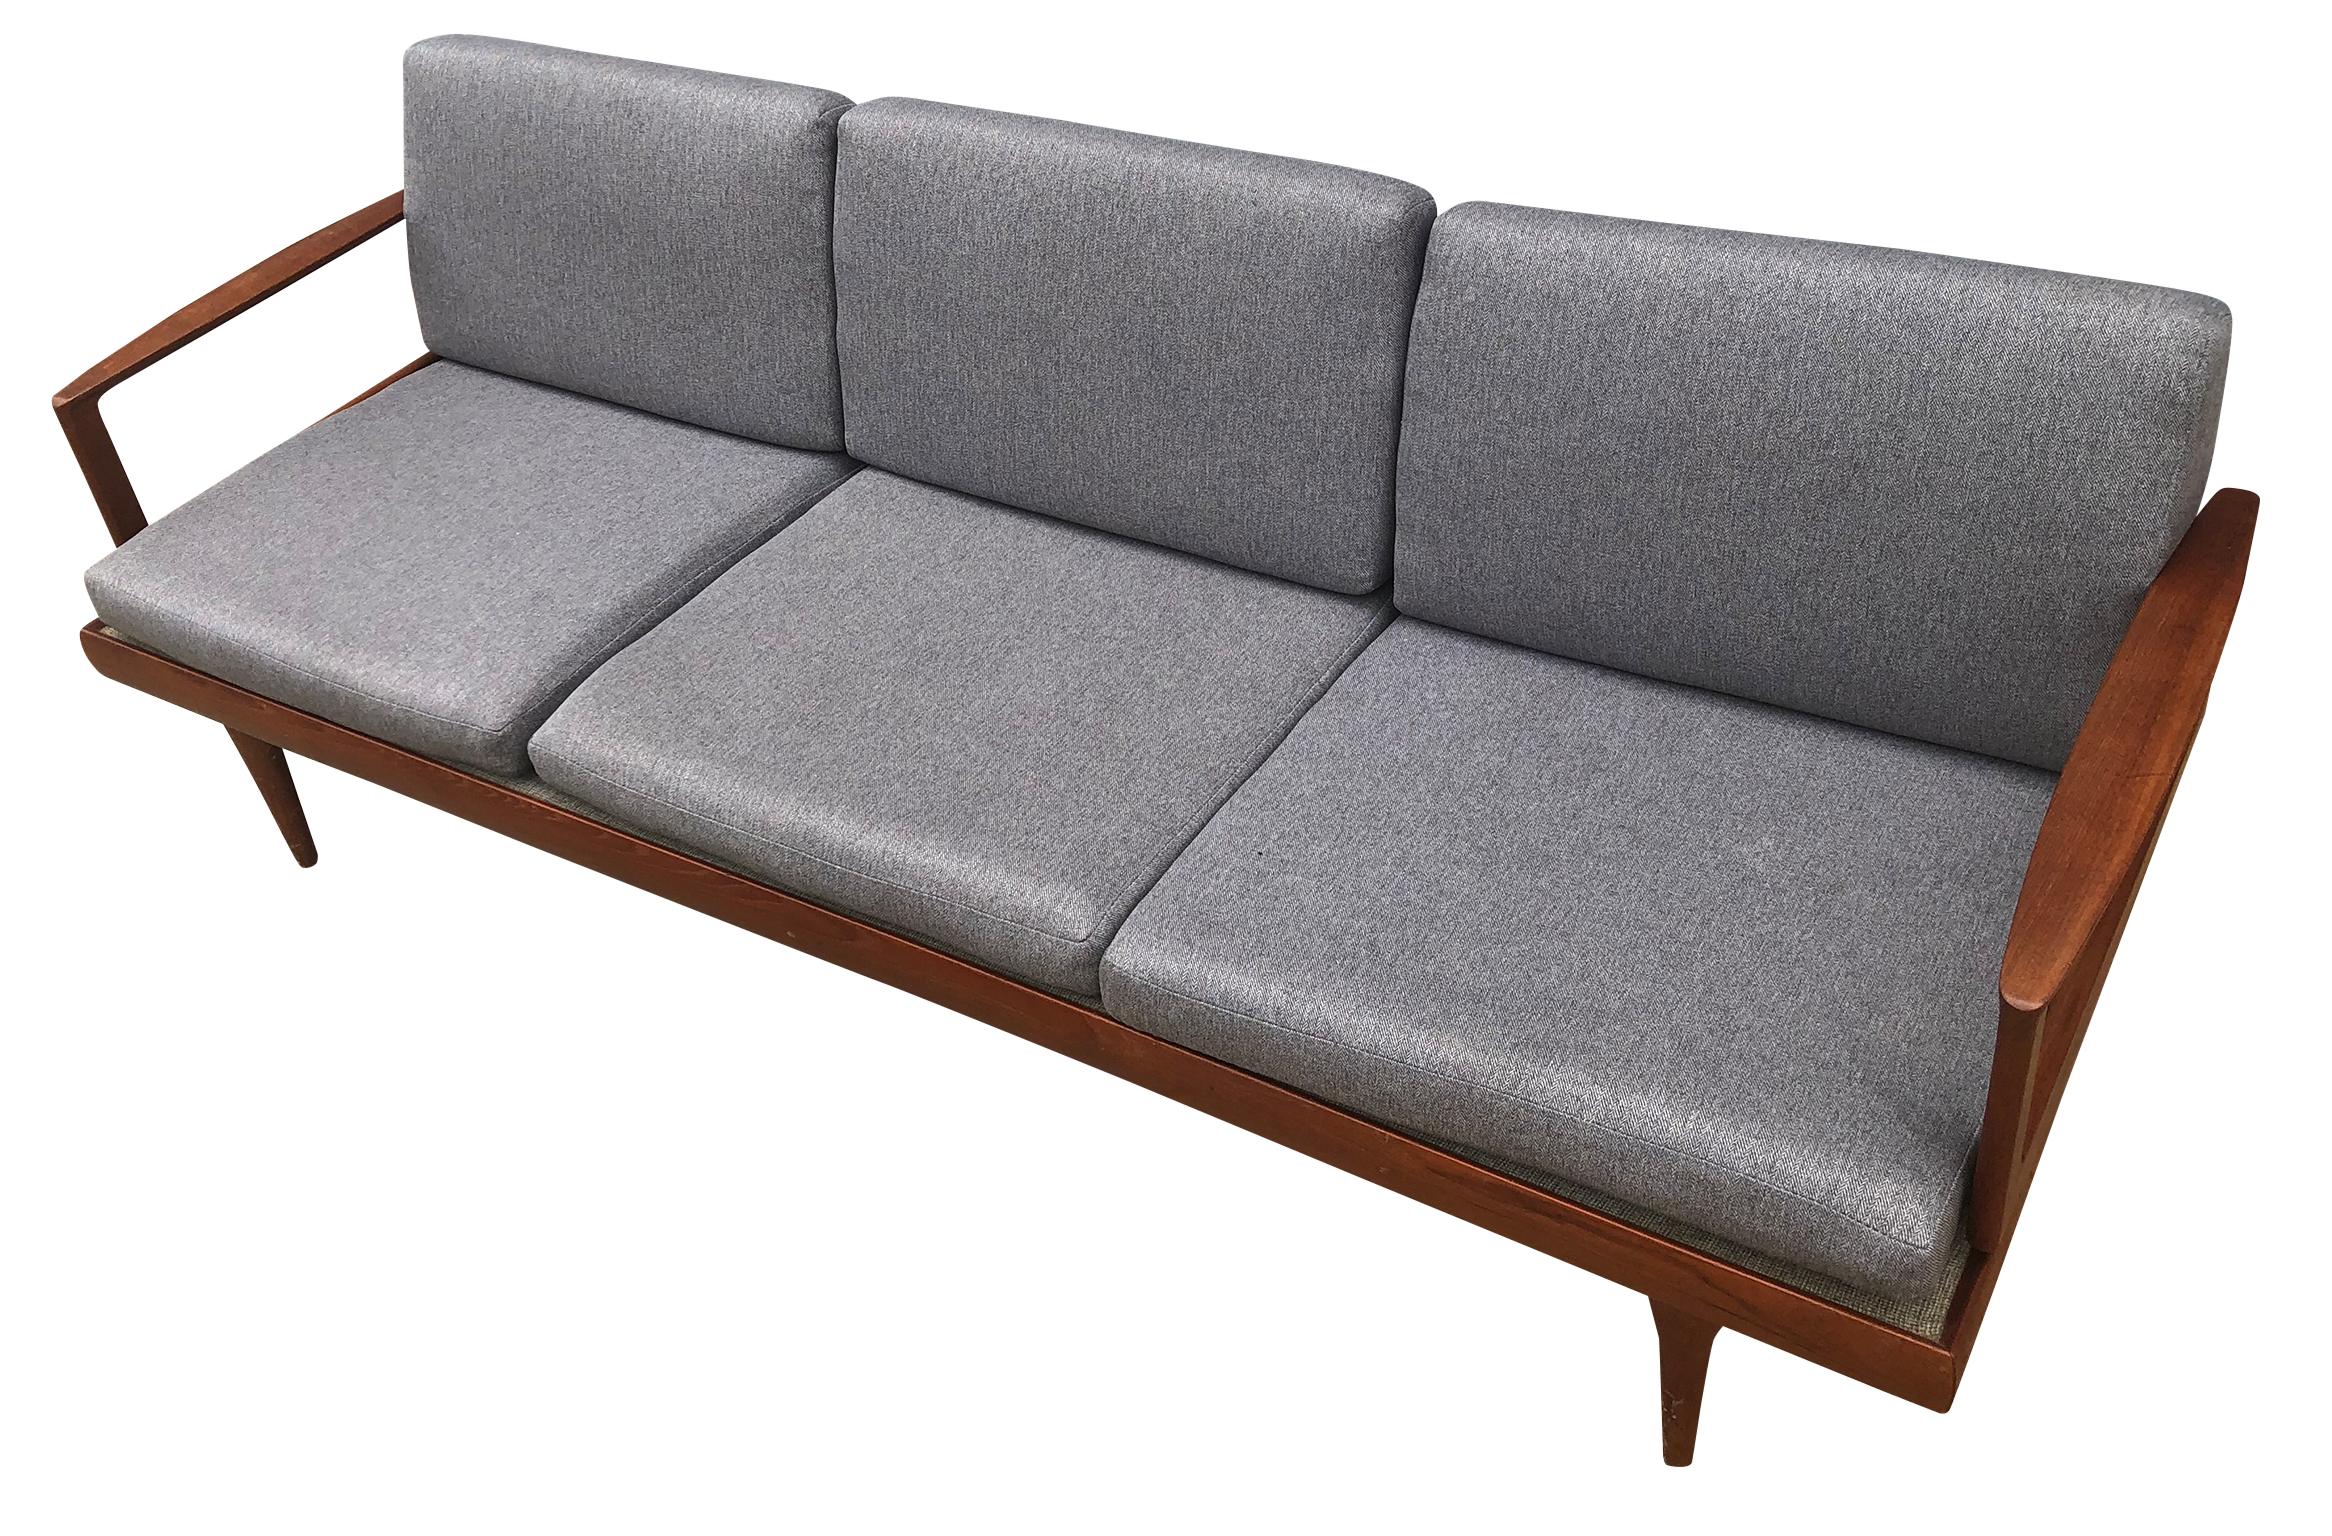 Scandinavian Modern Midcentury Low Danish Modern 3-Seat Sofa Couch Daybed Solid Teak Grey Fabric